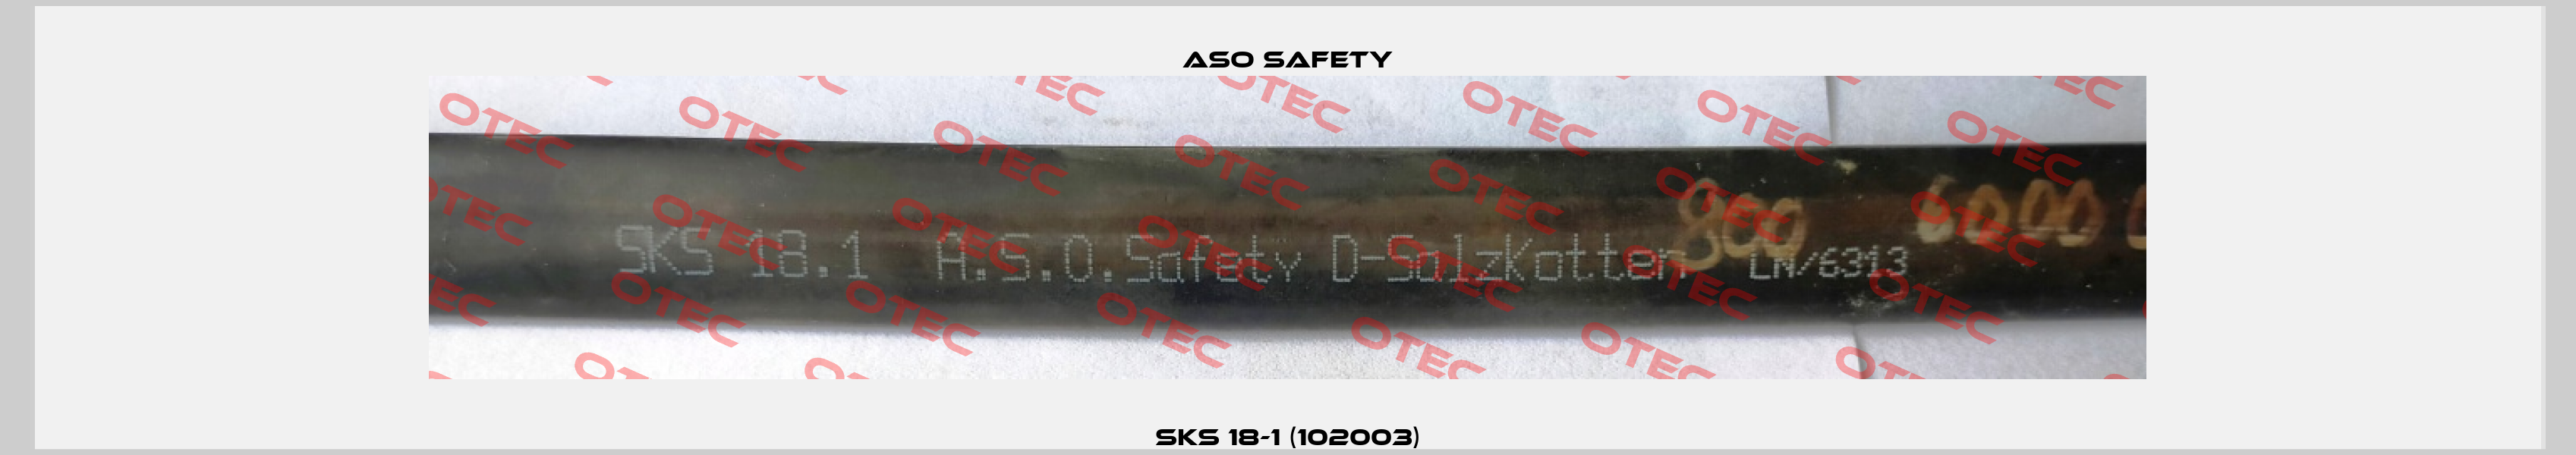 SKS 18-1 (102003) ASO SAFETY